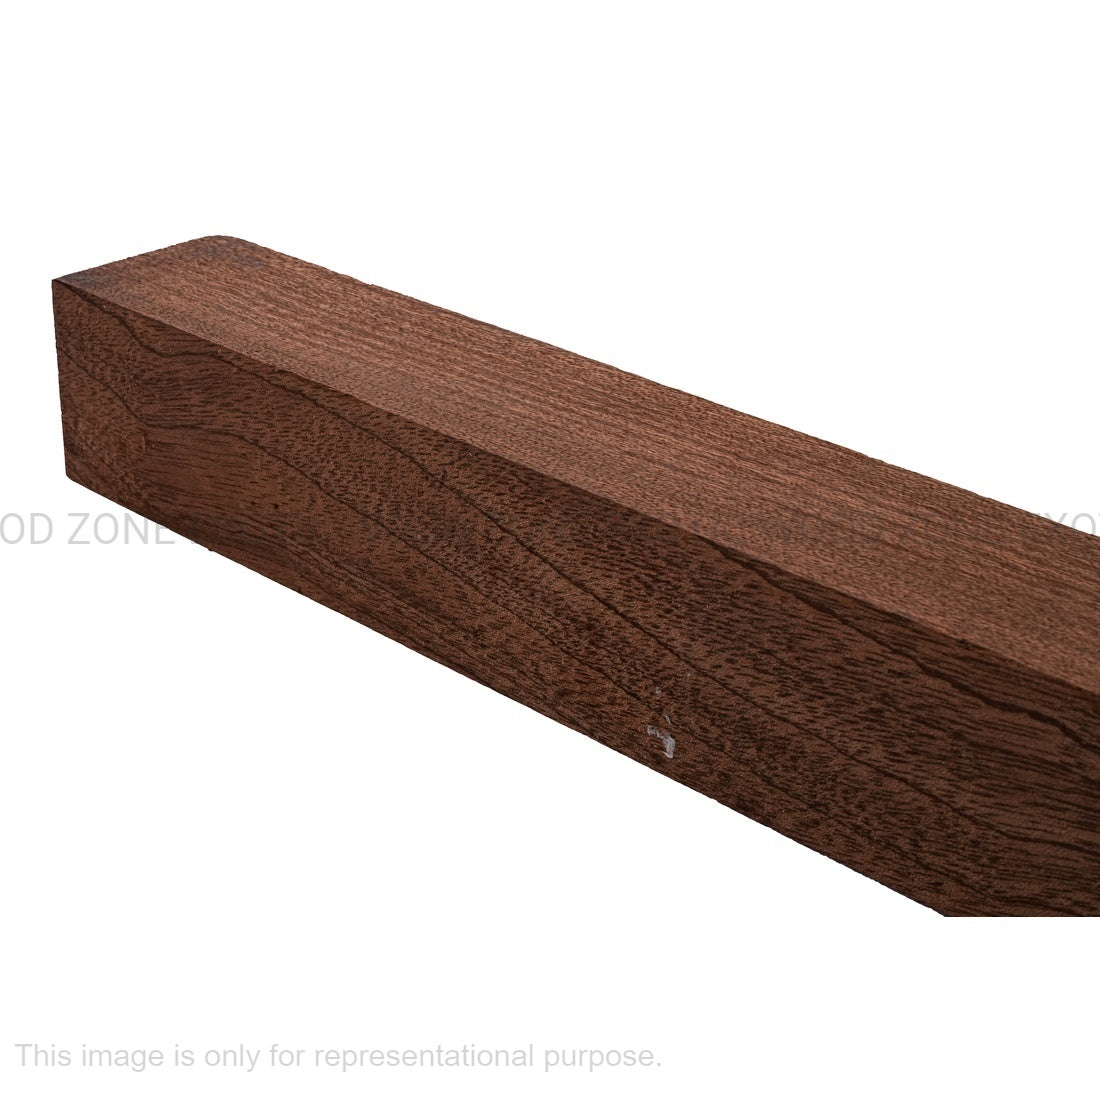 Sapele Turning Blanks - Exotic Wood Zone - Buy online Across USA 